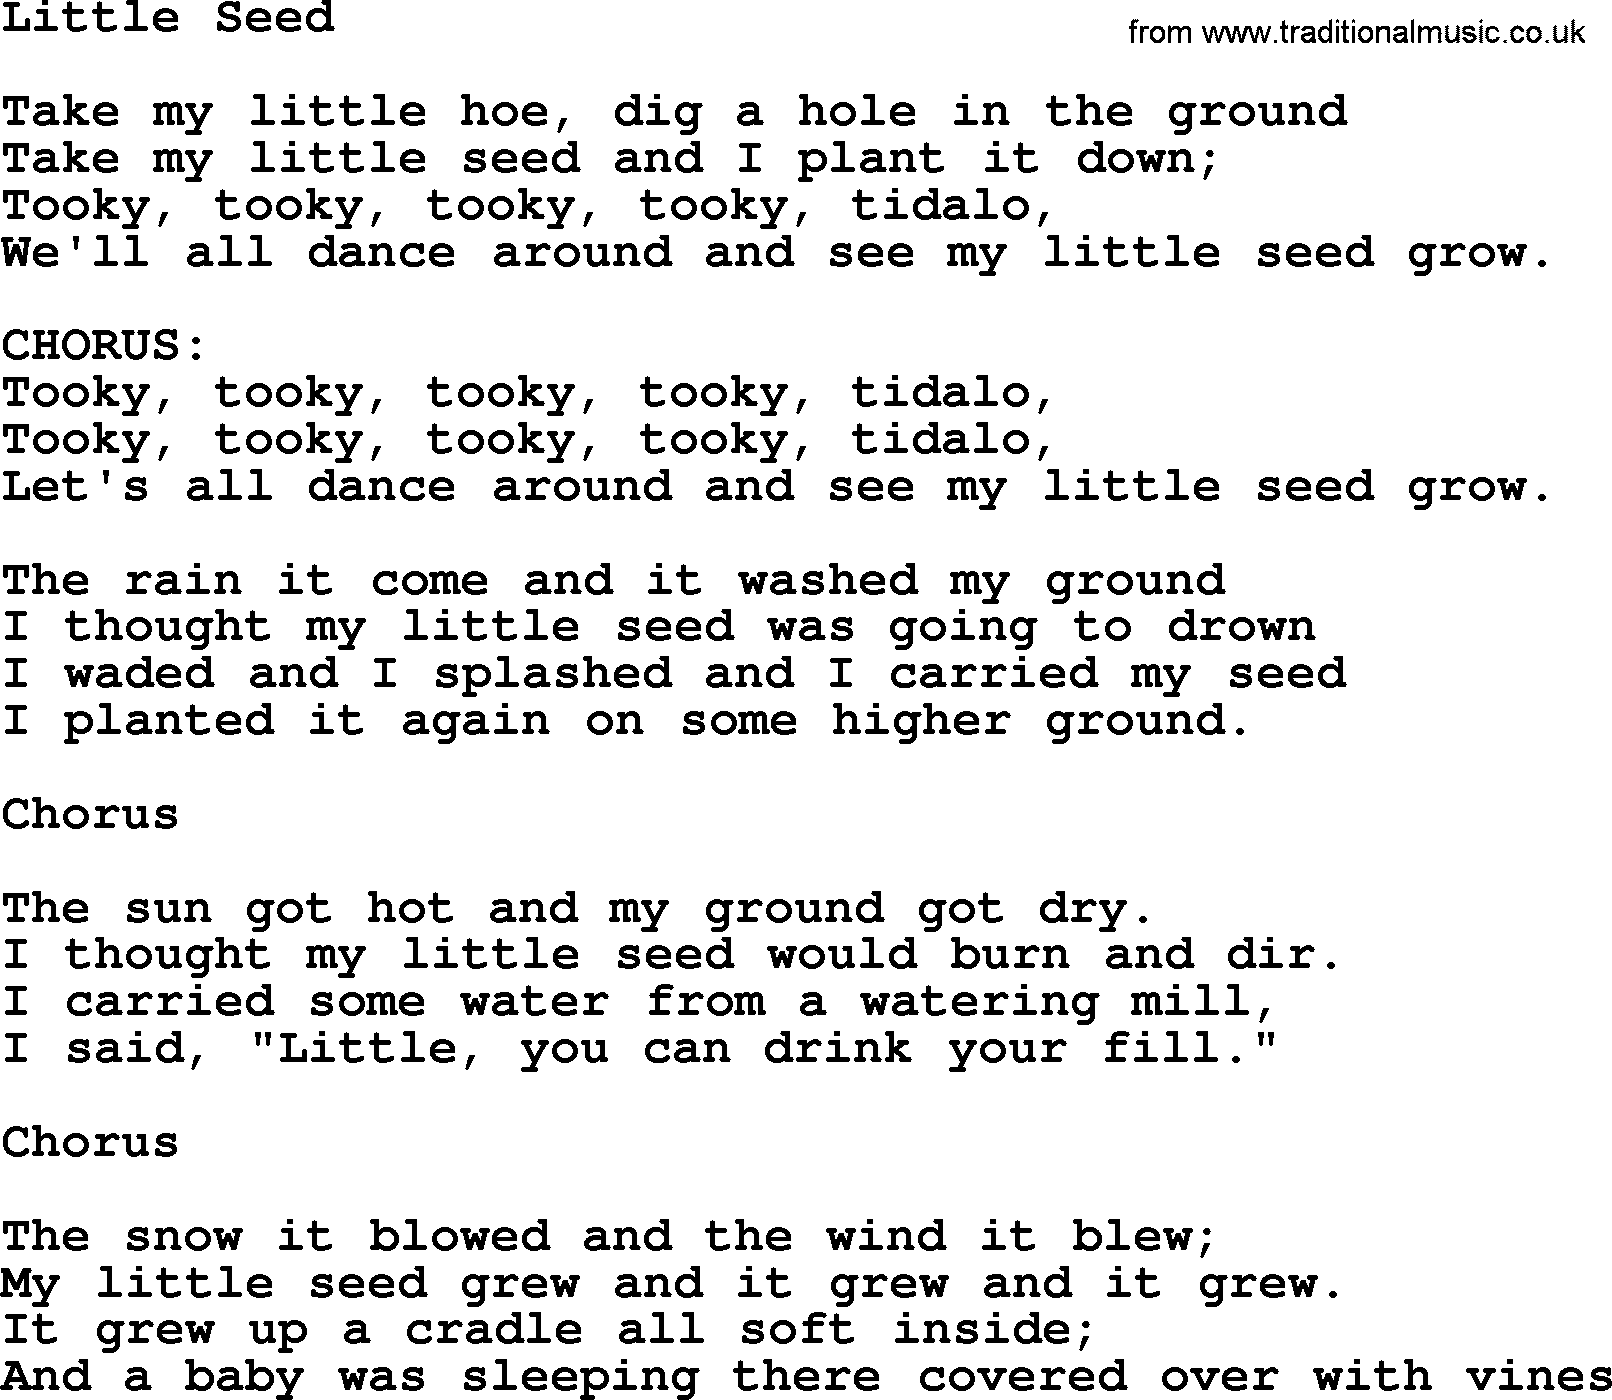 Woody Guthrie song Little Seed lyrics